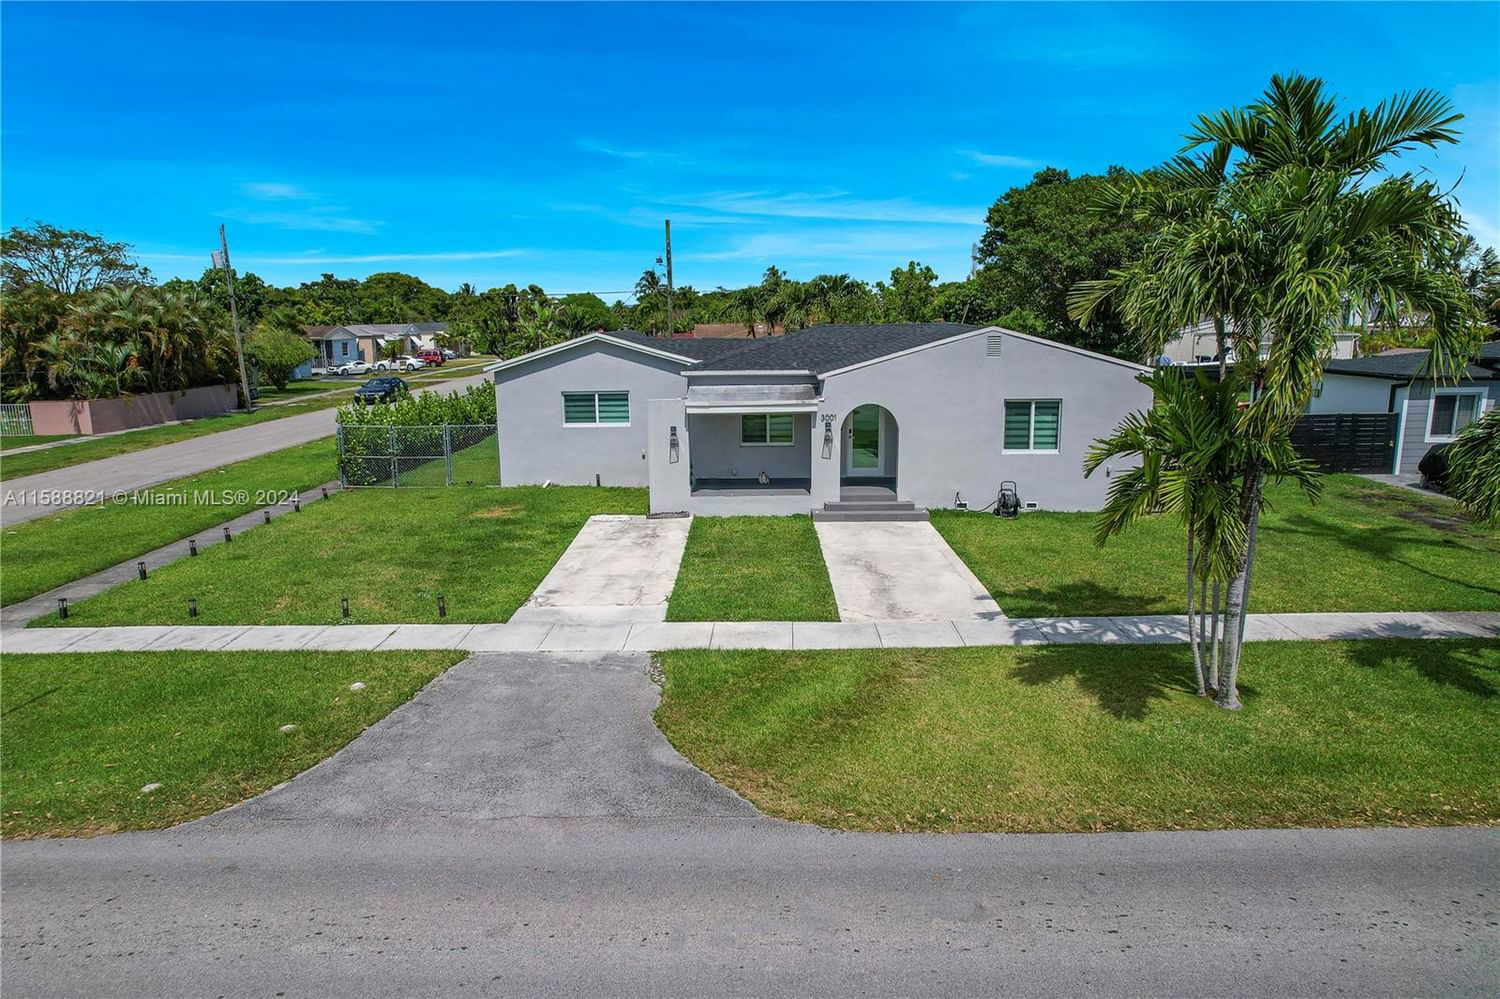 Real estate property located at 3001 69th Ave, Miami-Dade County, CENTRAL MIAMI PART 4, Miami, FL